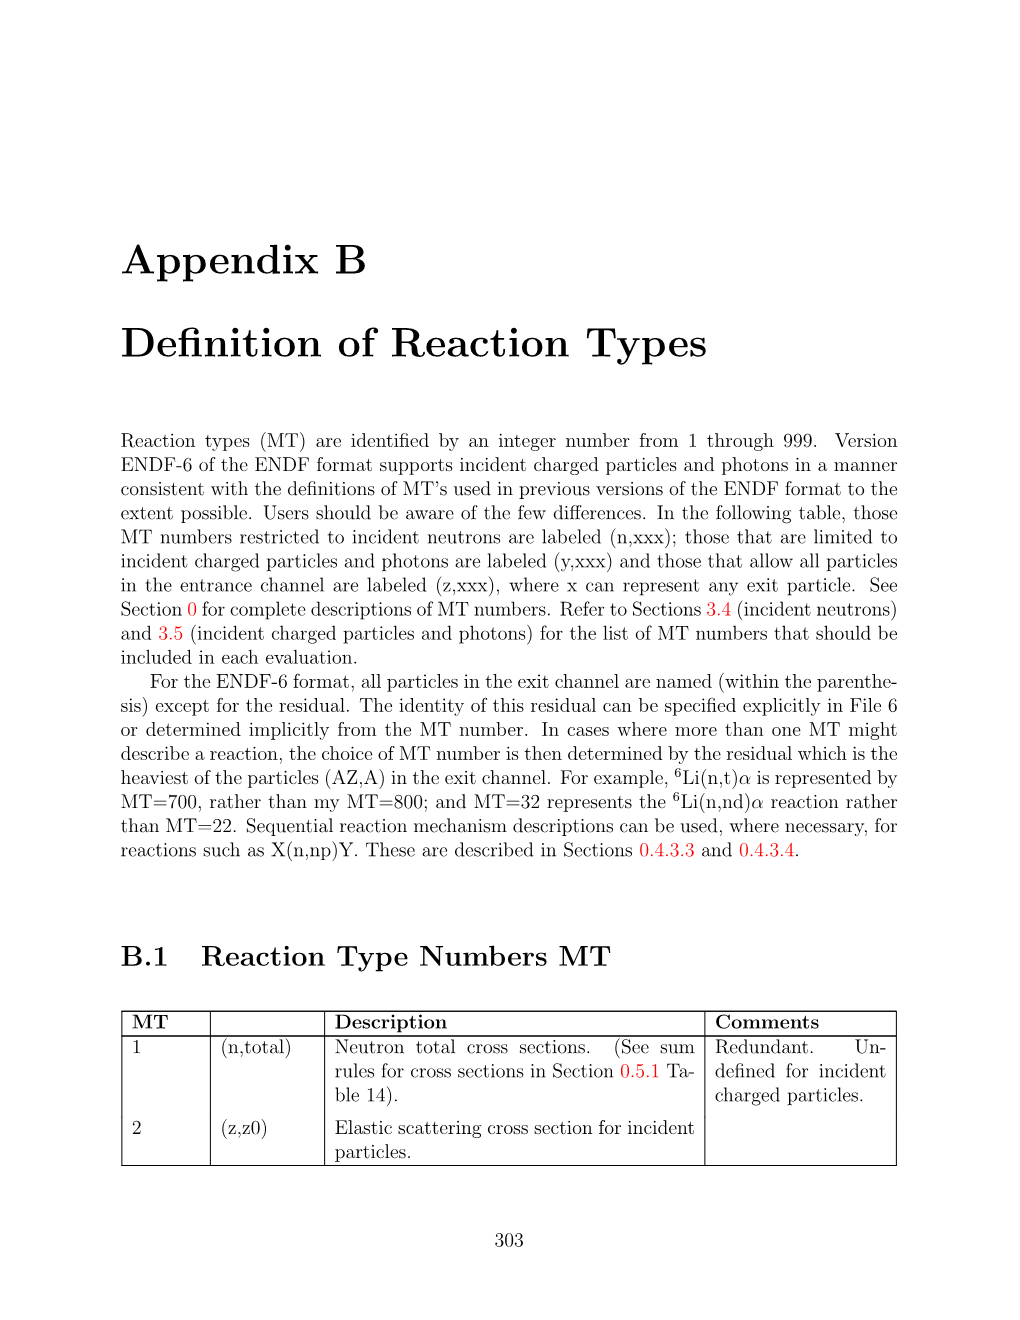 Appendix B Definition of Reaction Types